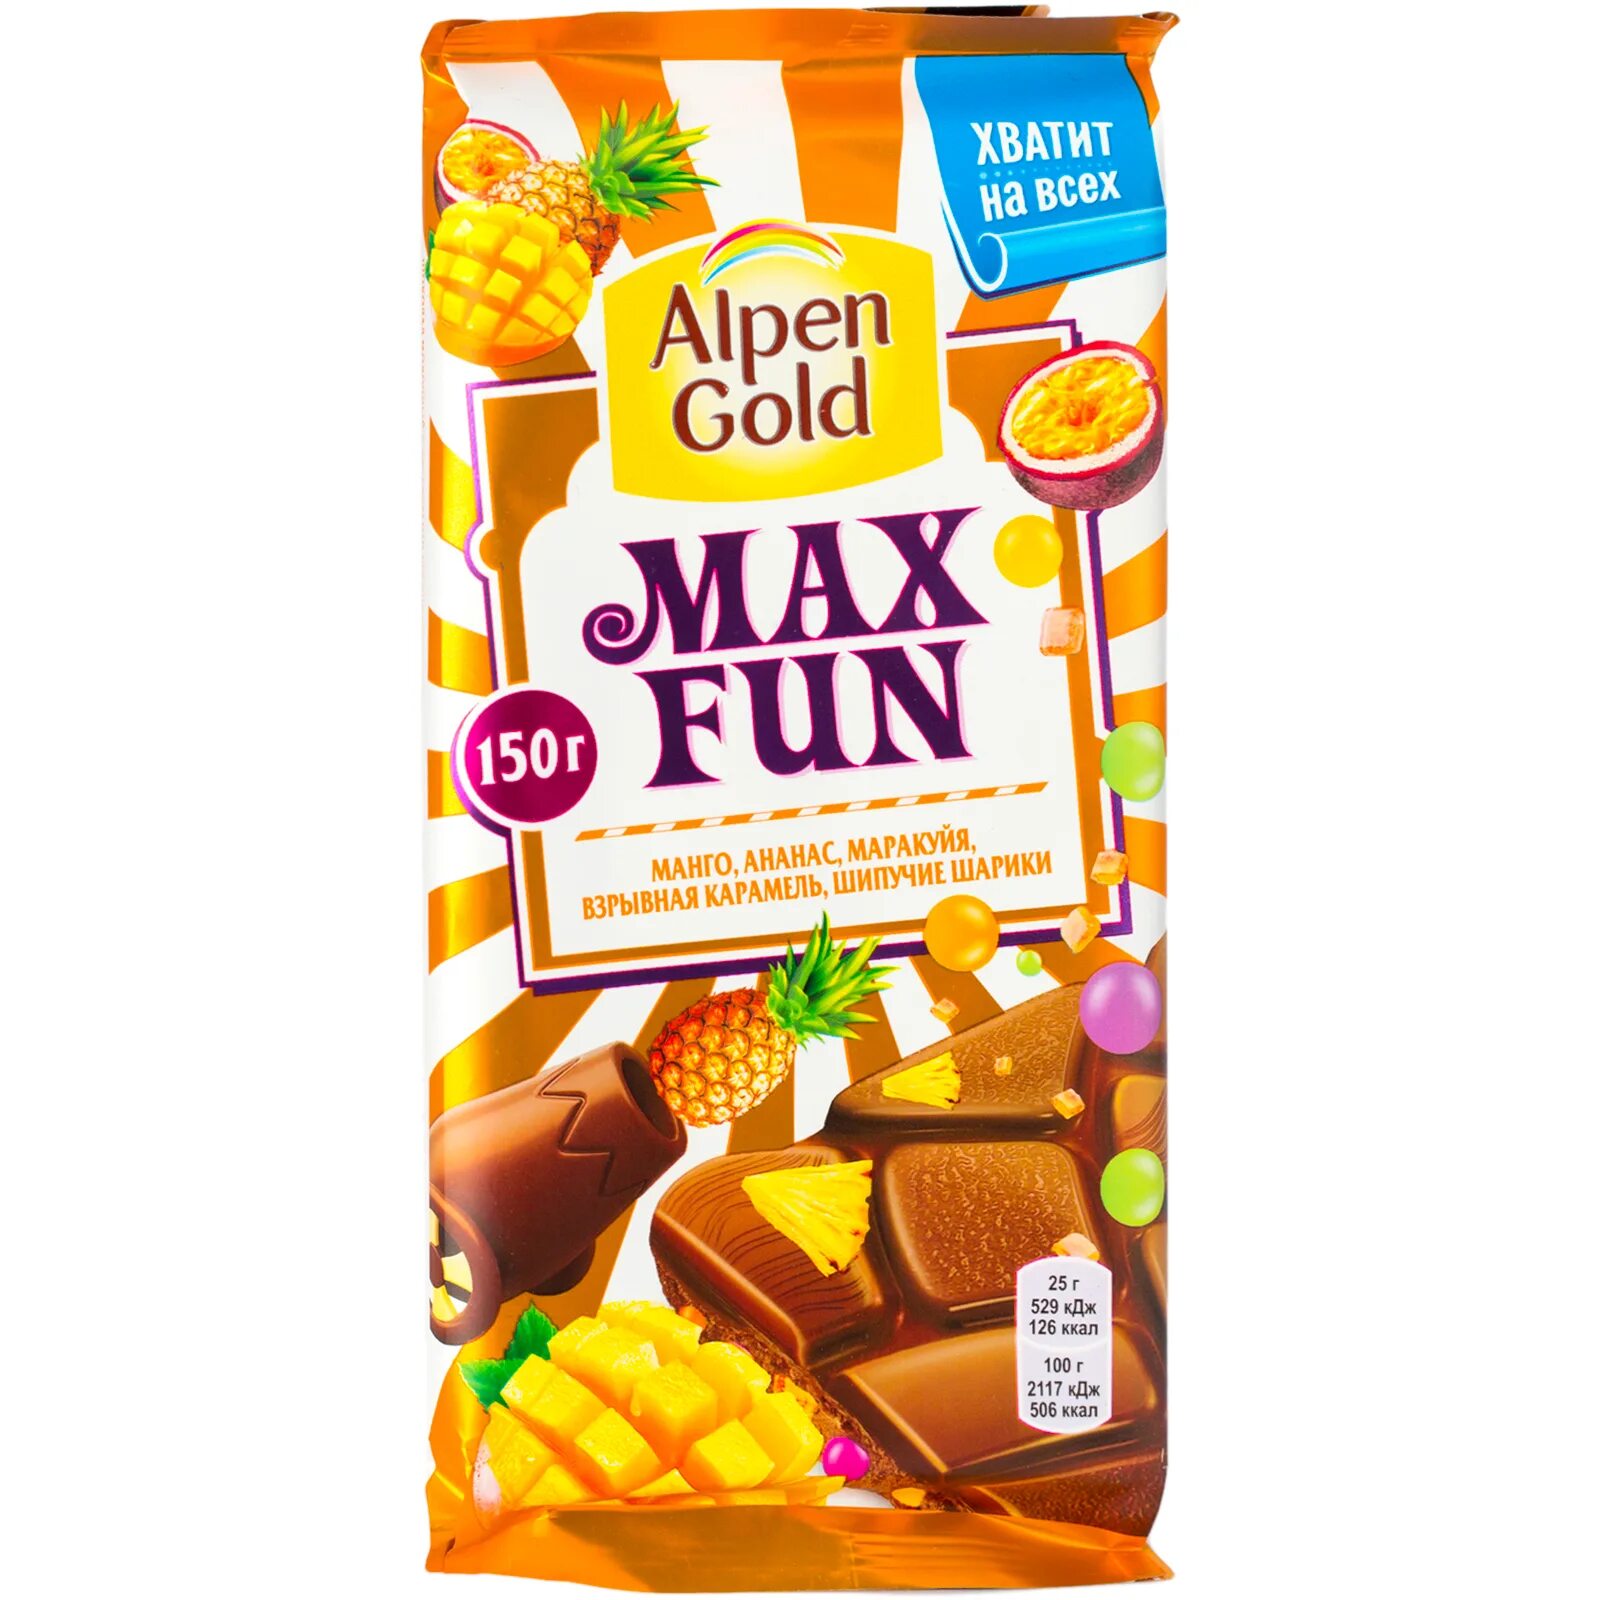 Fun mix. Шоколад Альпен Голд Max fun, взрывная карамель, 160 г. Альпен Гольд шоколад Макс фан взрывная карамель. Альпен Голд микс фан. Alpen Gold Max 160 г.